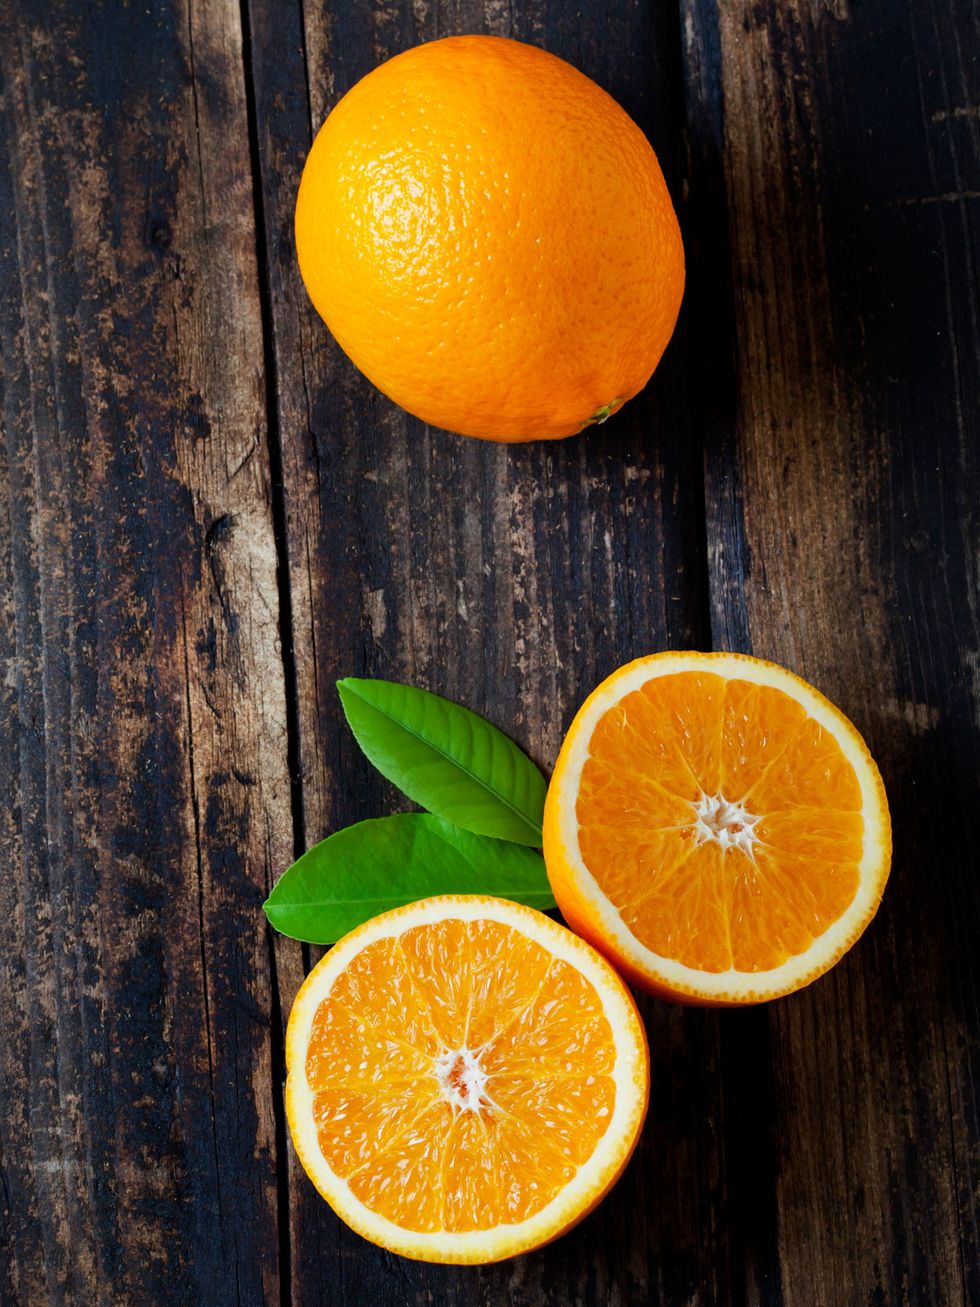 Citrus, Yellow, Fruit, Orange, Natural foods, Ingredient, Tangerine, Produce, Sharing, Citric acid, 